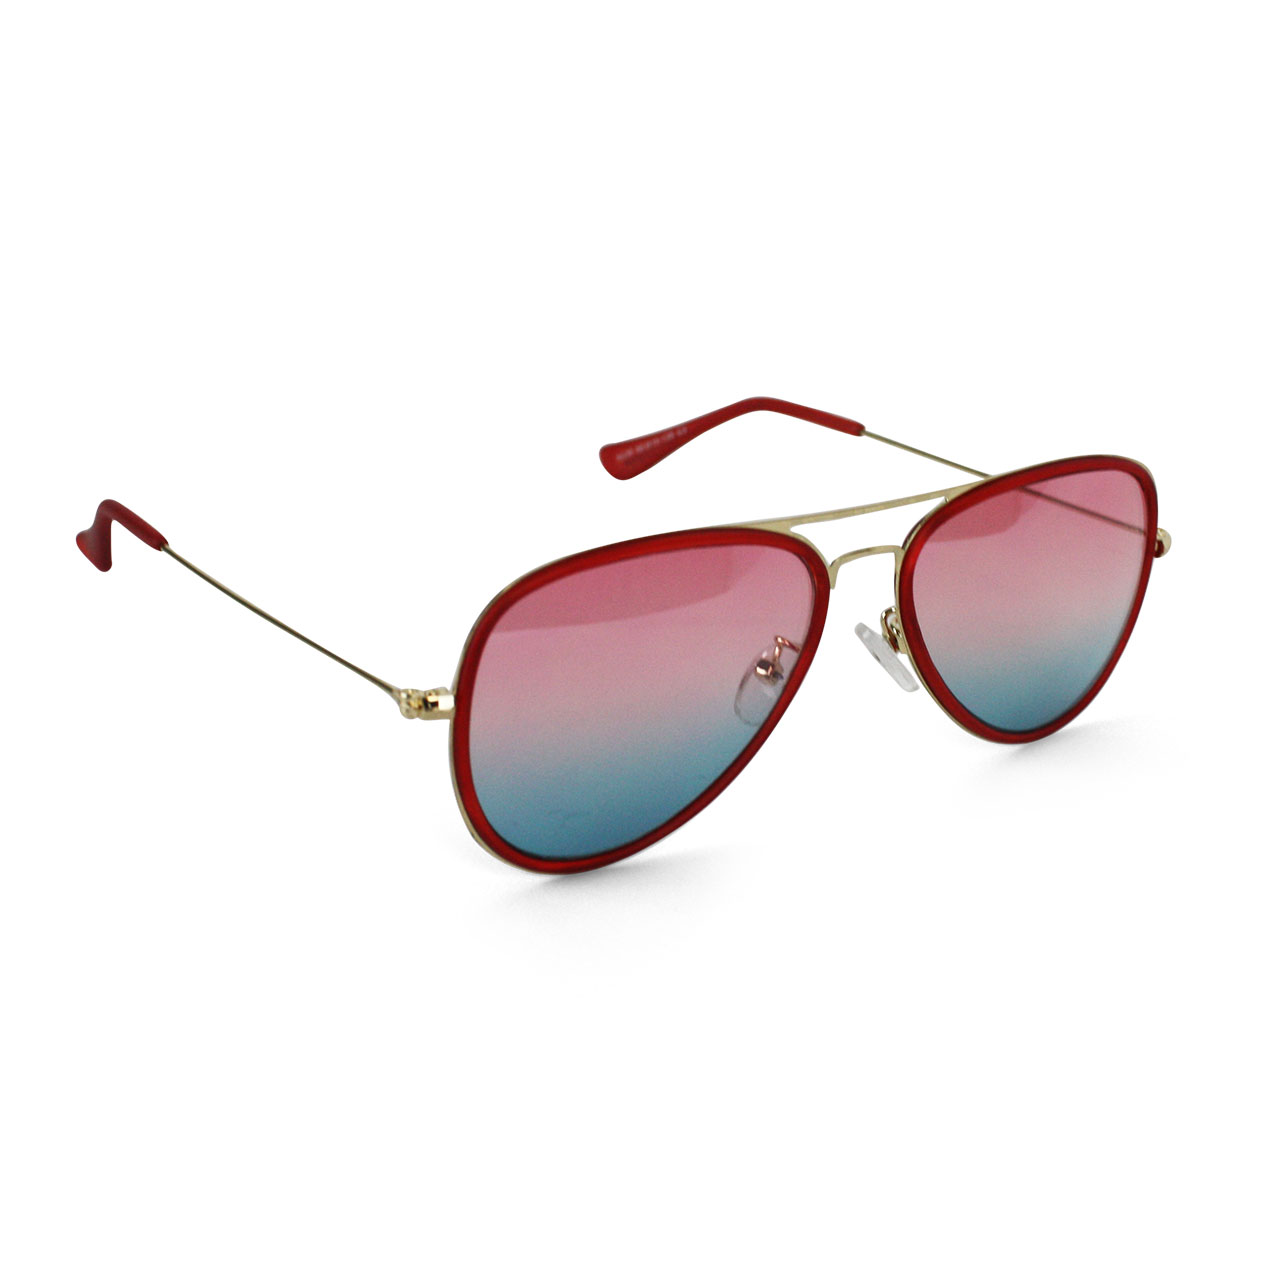 Crimson Red Frame Rimmed Aviator Sunglasses With Silver Metal Frame